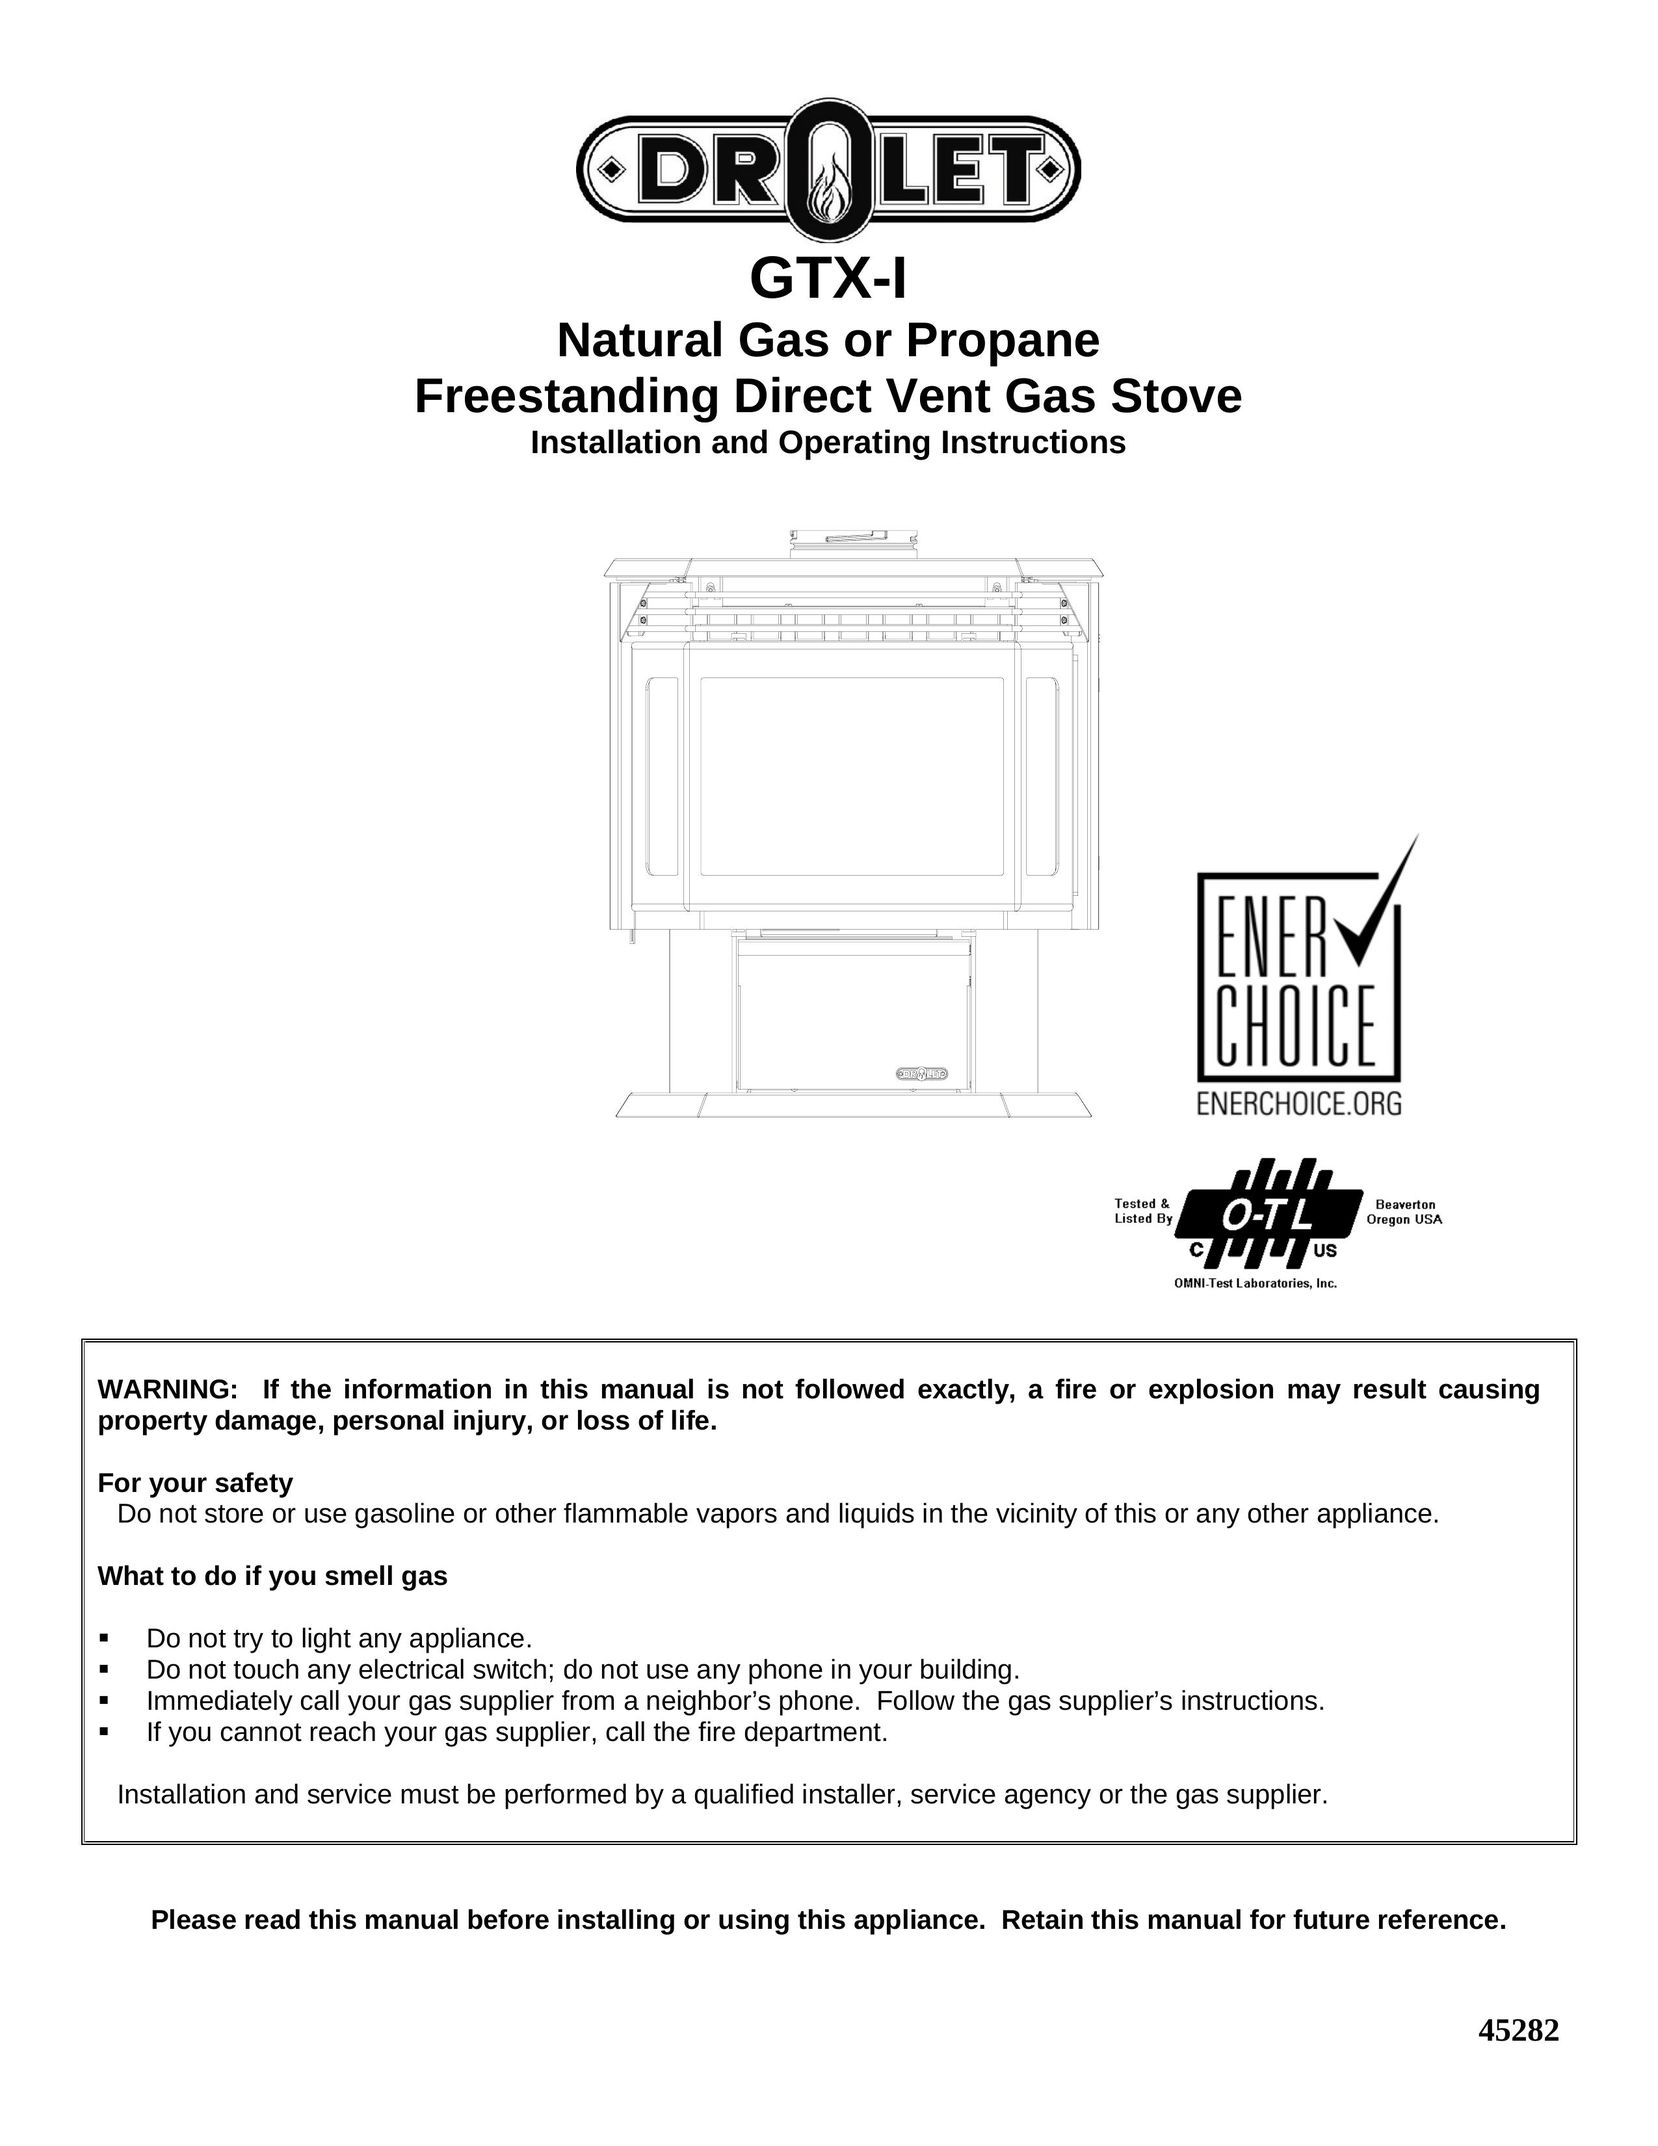 Drolet GTX-I Stove User Manual